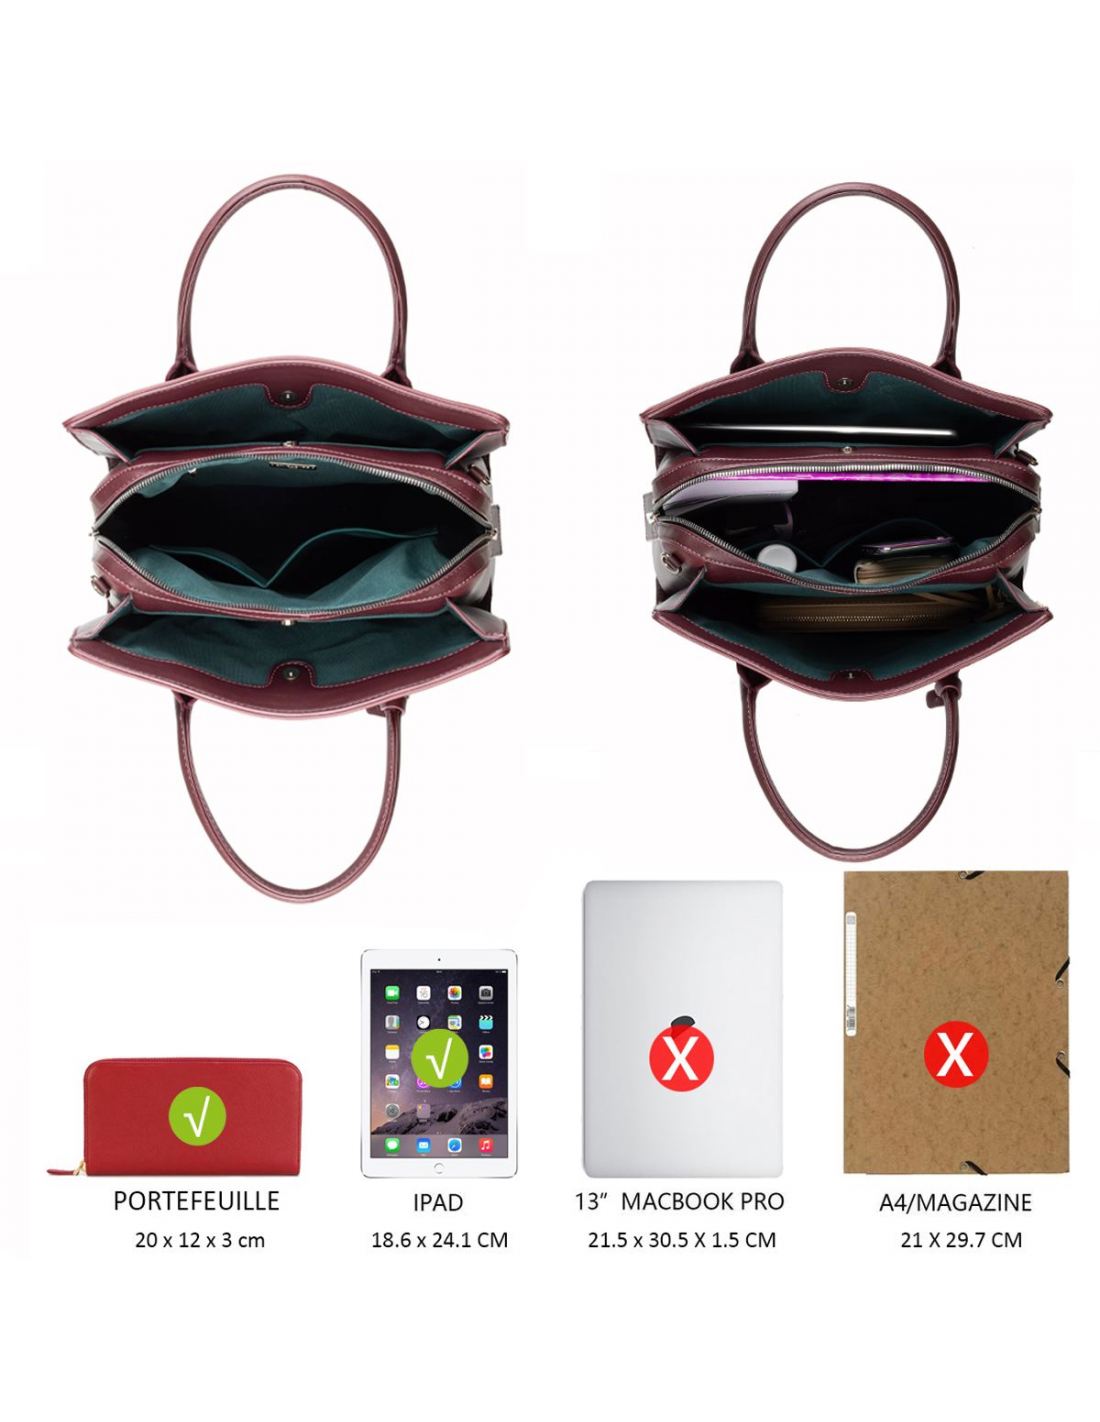 Grand sac à dos convertible (sac à main) double compartiment en cuir – EMZA